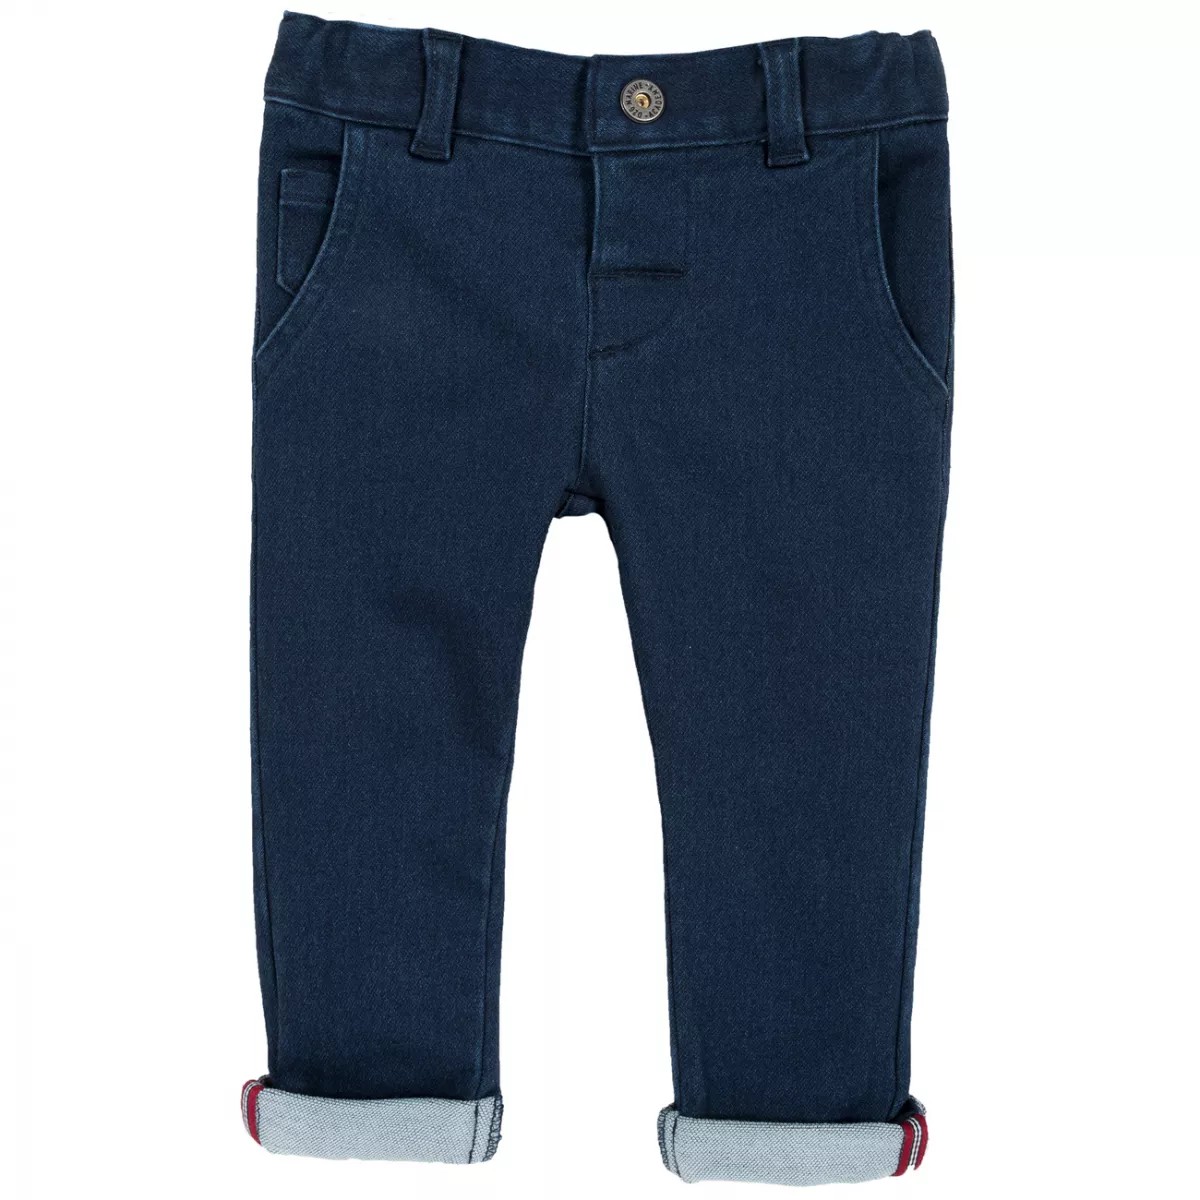 Pantalon copii Chicco, albastru inchis, 104